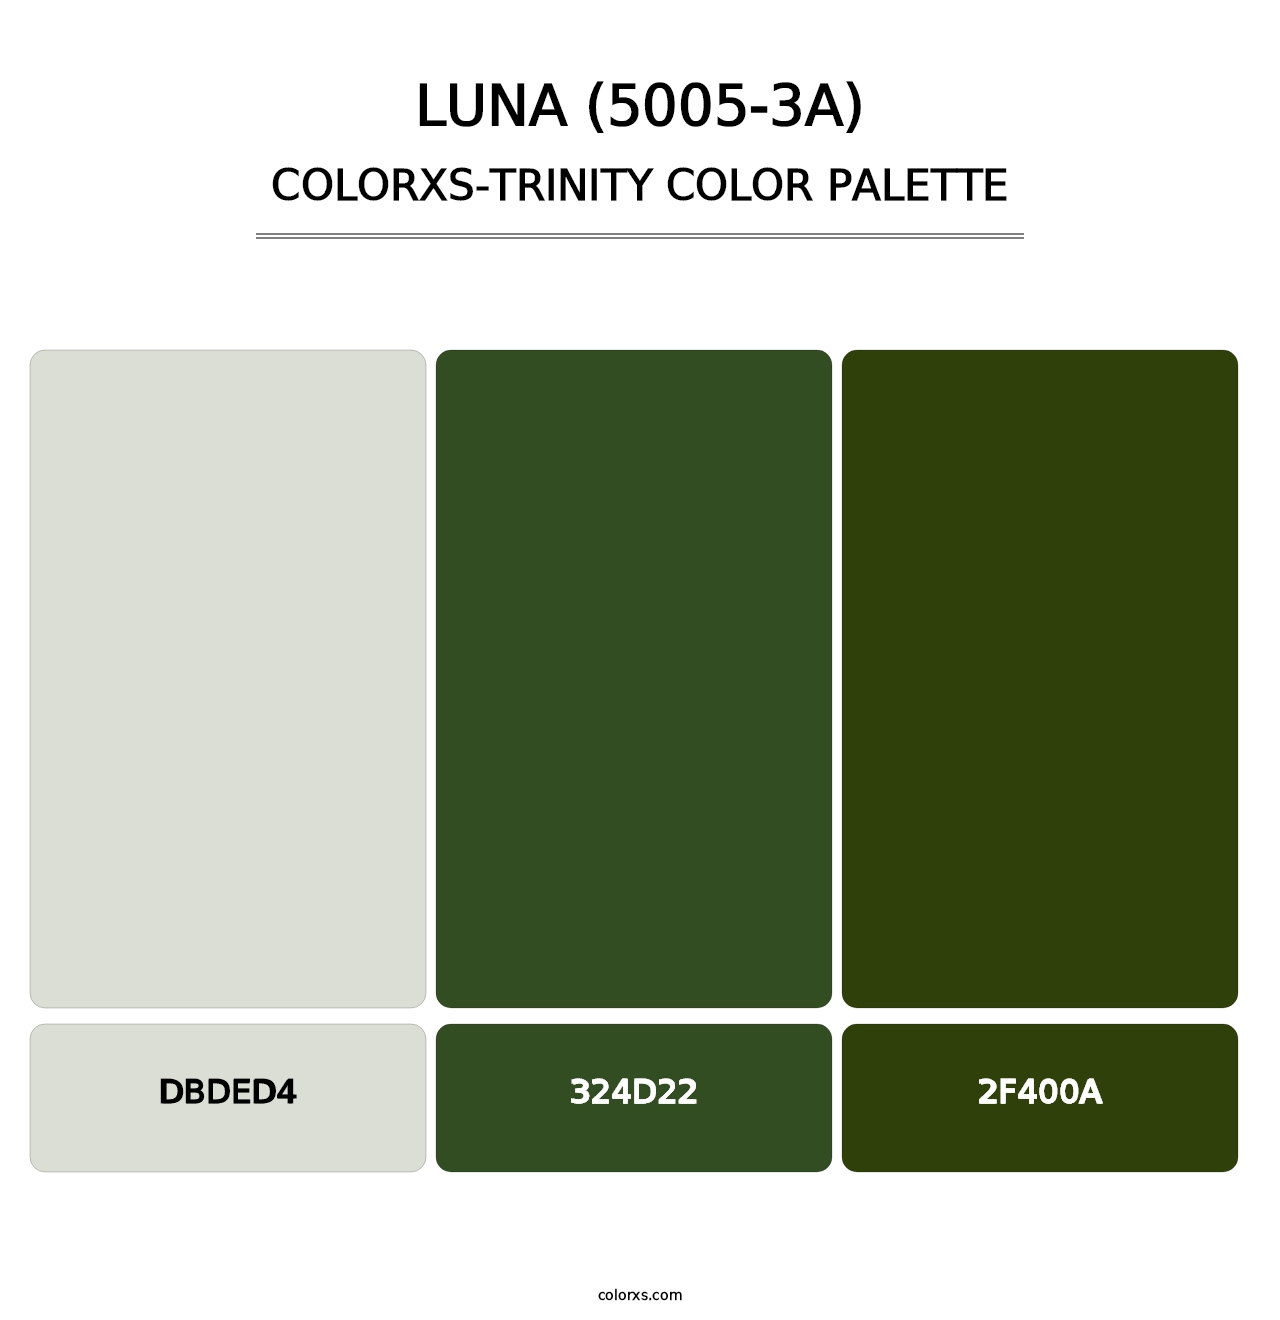 Luna (5005-3A) - Colorxs Trinity Palette